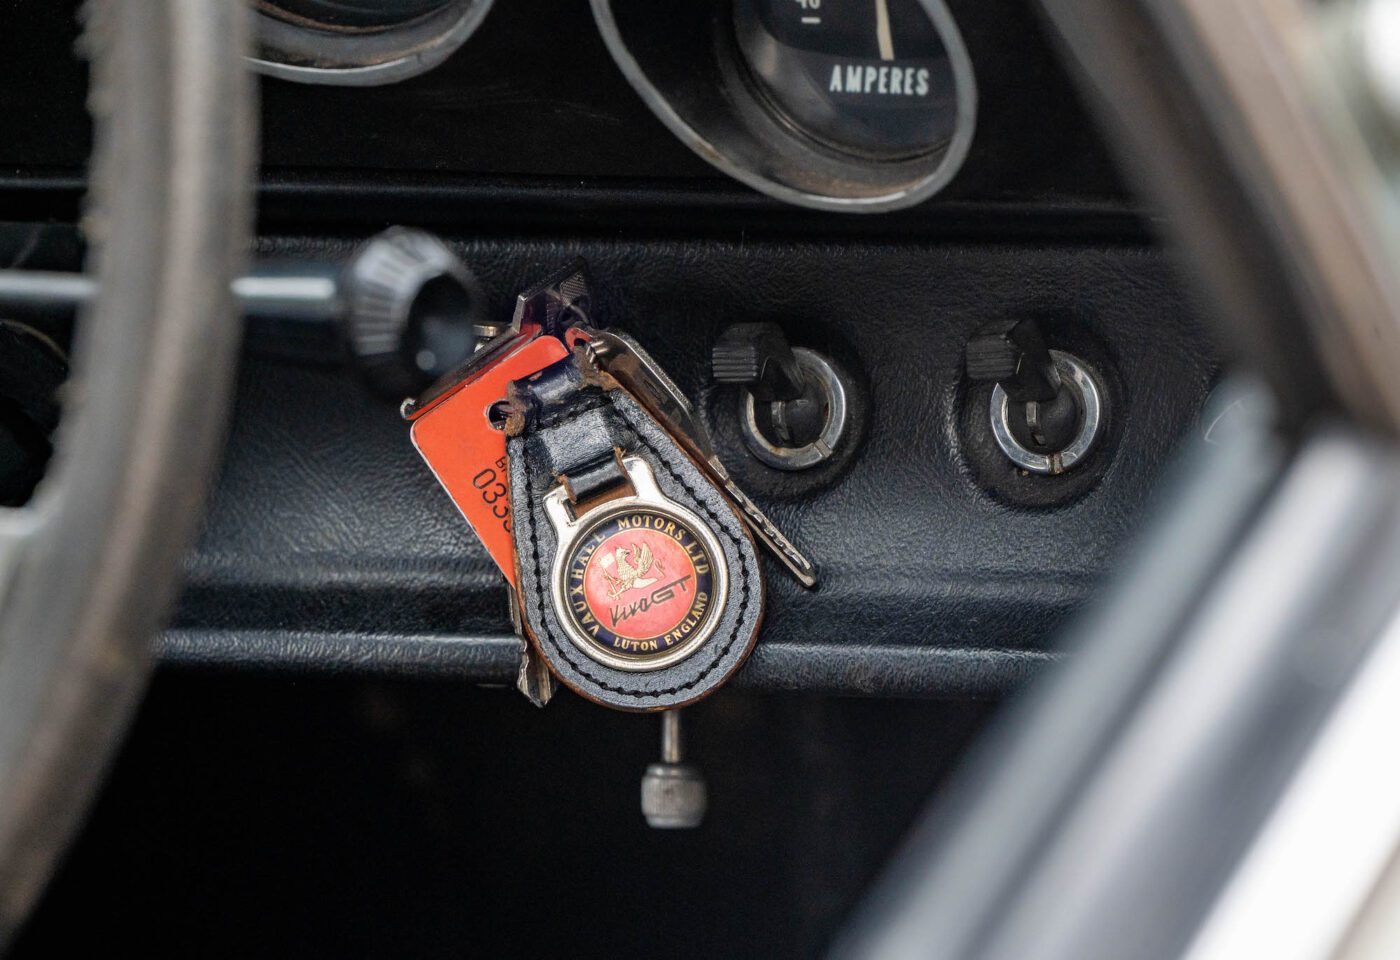 Vauxhall Viva GT key ring